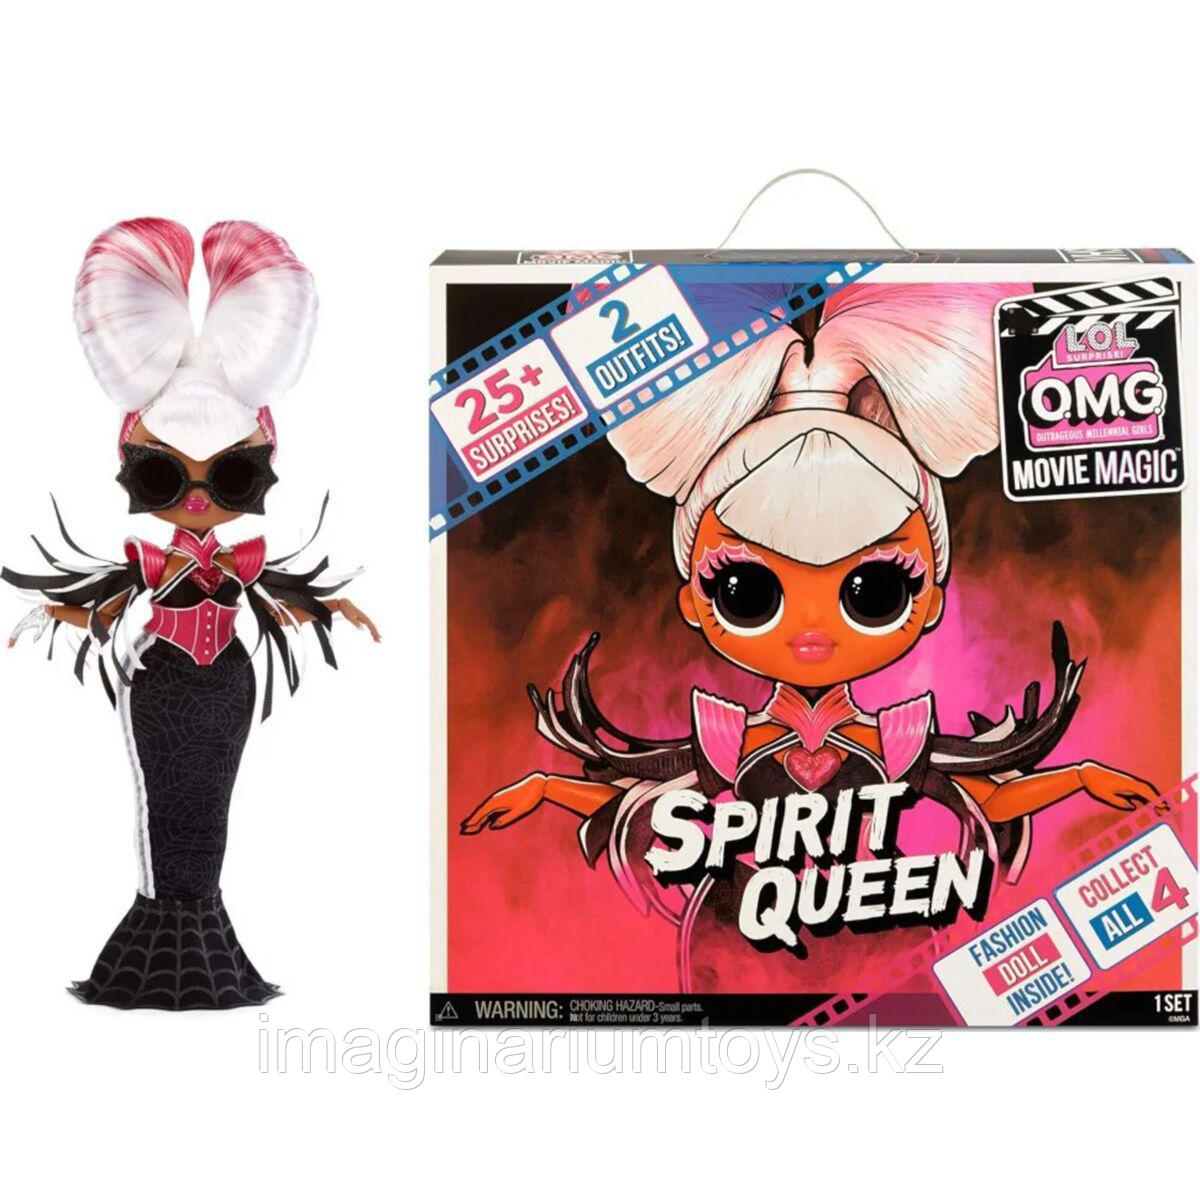 Кукла LOL Surprise OMG Movie Magic Spirit Queen